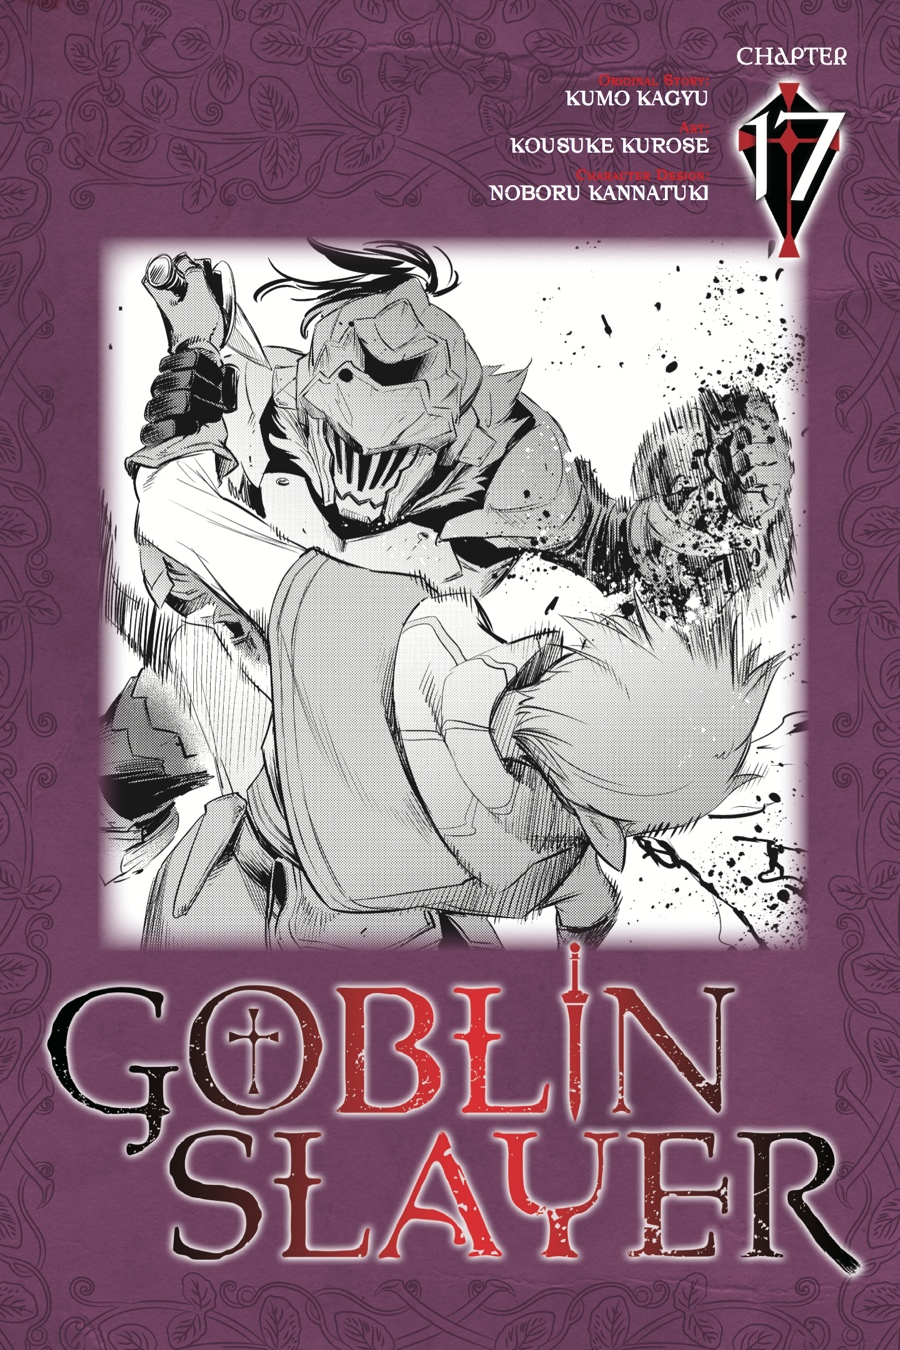 76 Goblin Slayer ideas  goblin, slayer, slayer anime